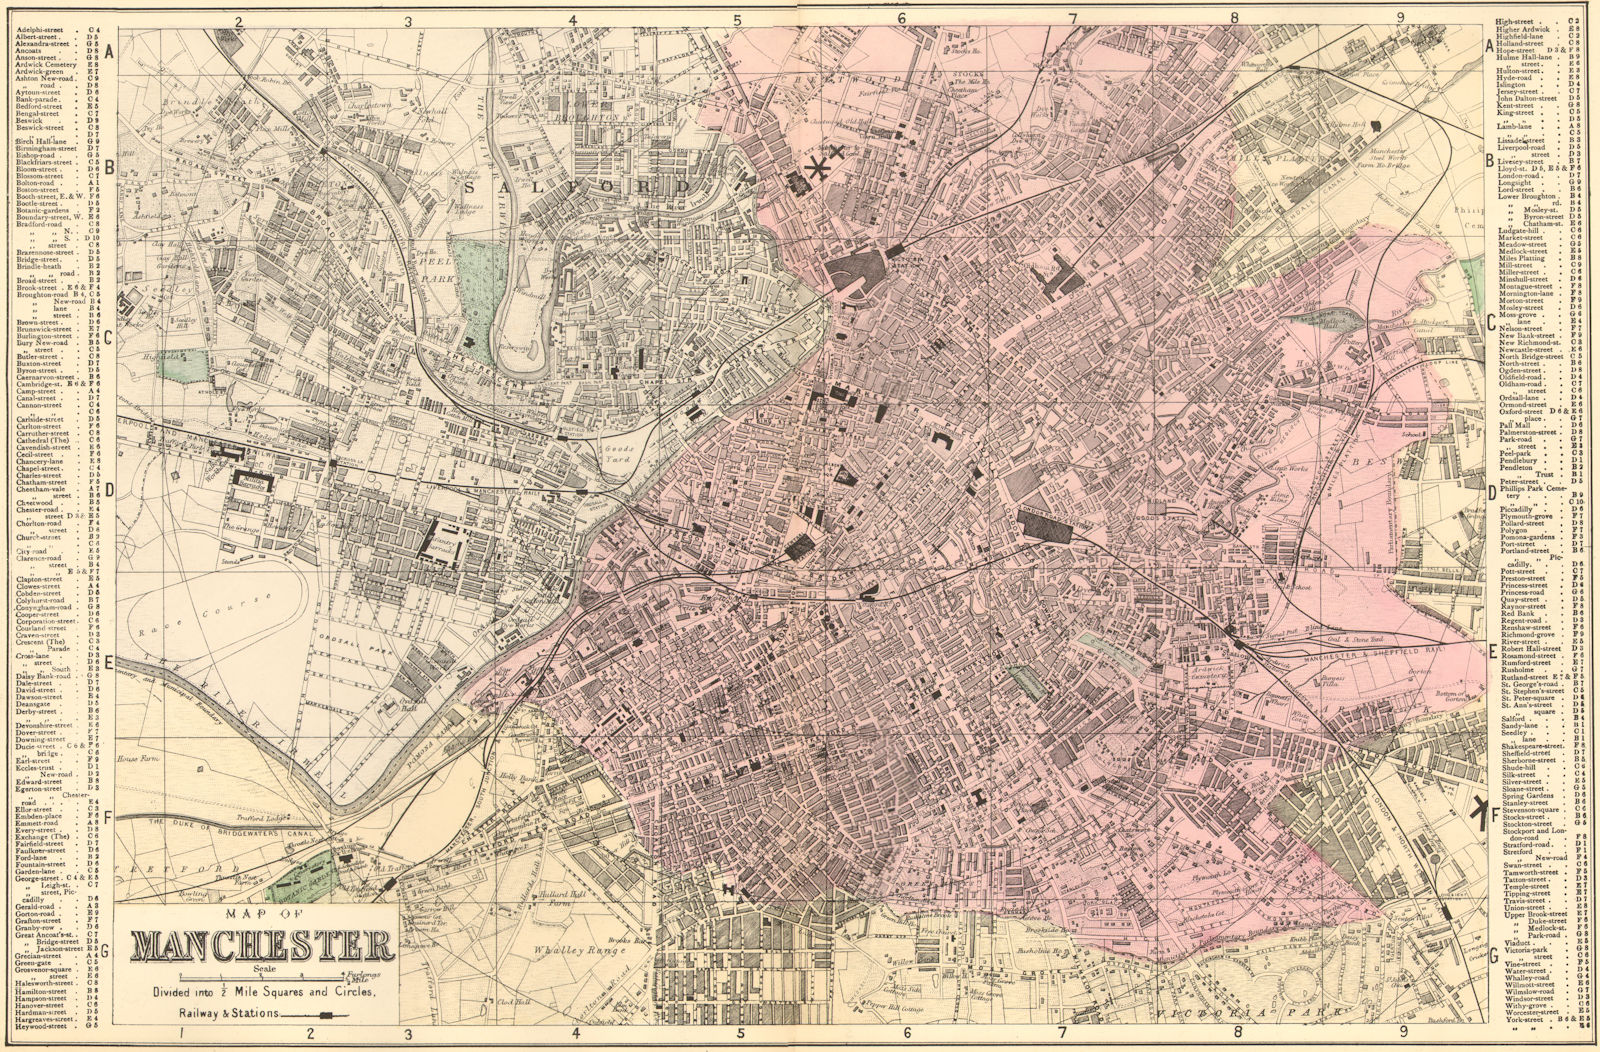 MANCHESTER. inc Salford Old Trafford Hulme. Town plan. GW BACON 1884 map